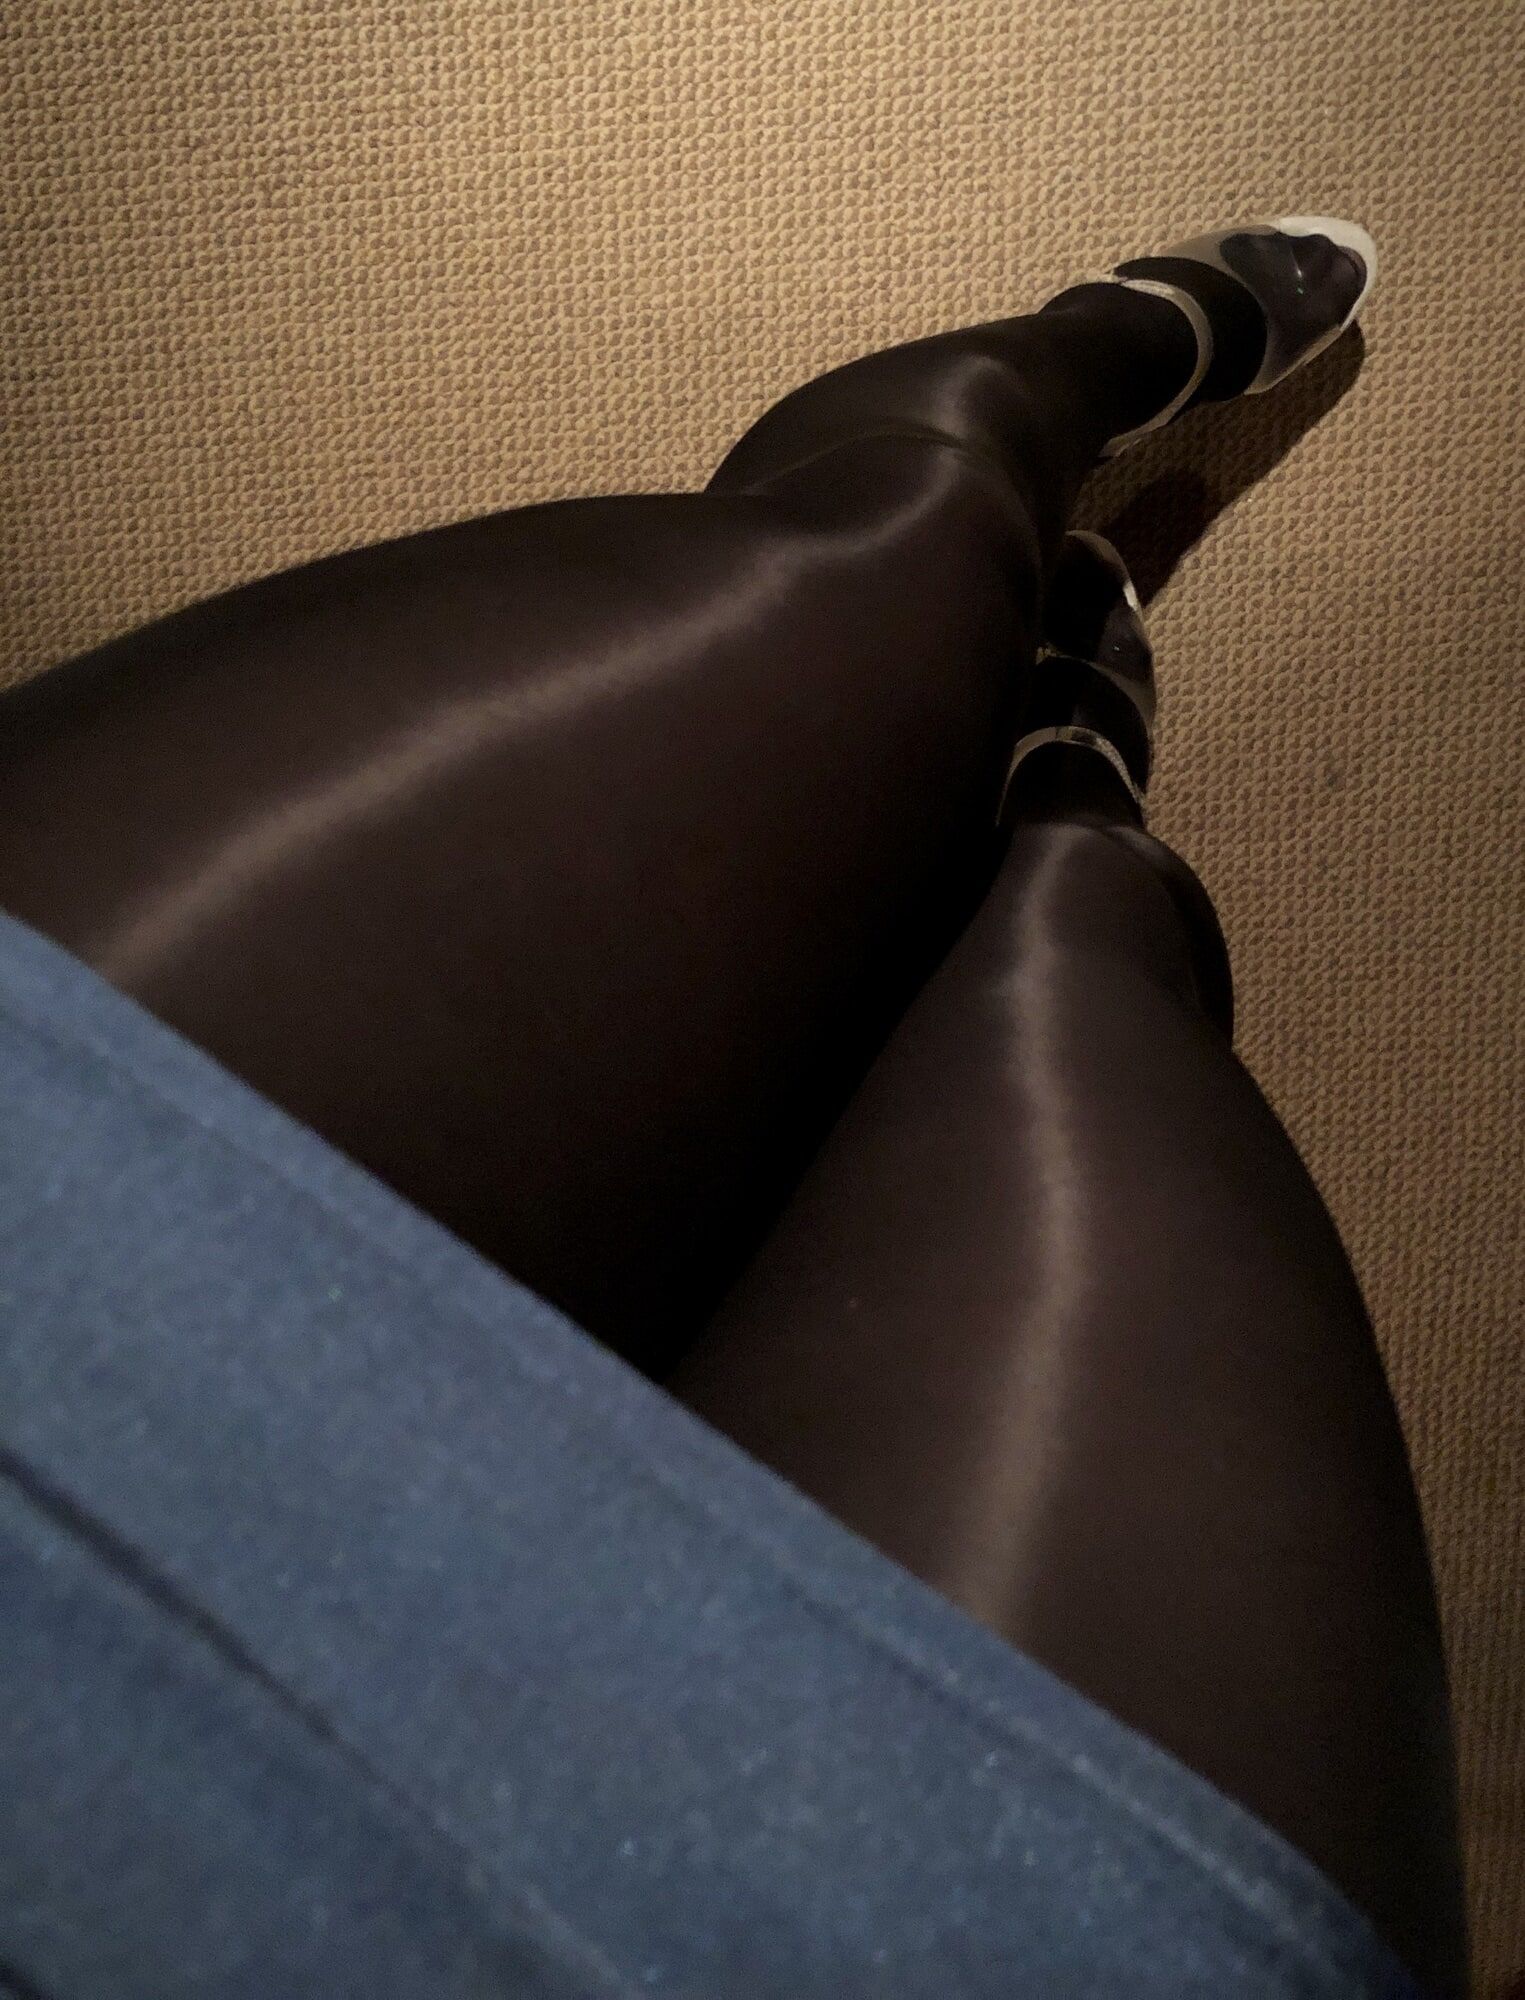 My legs on shiny pantyhose! #28